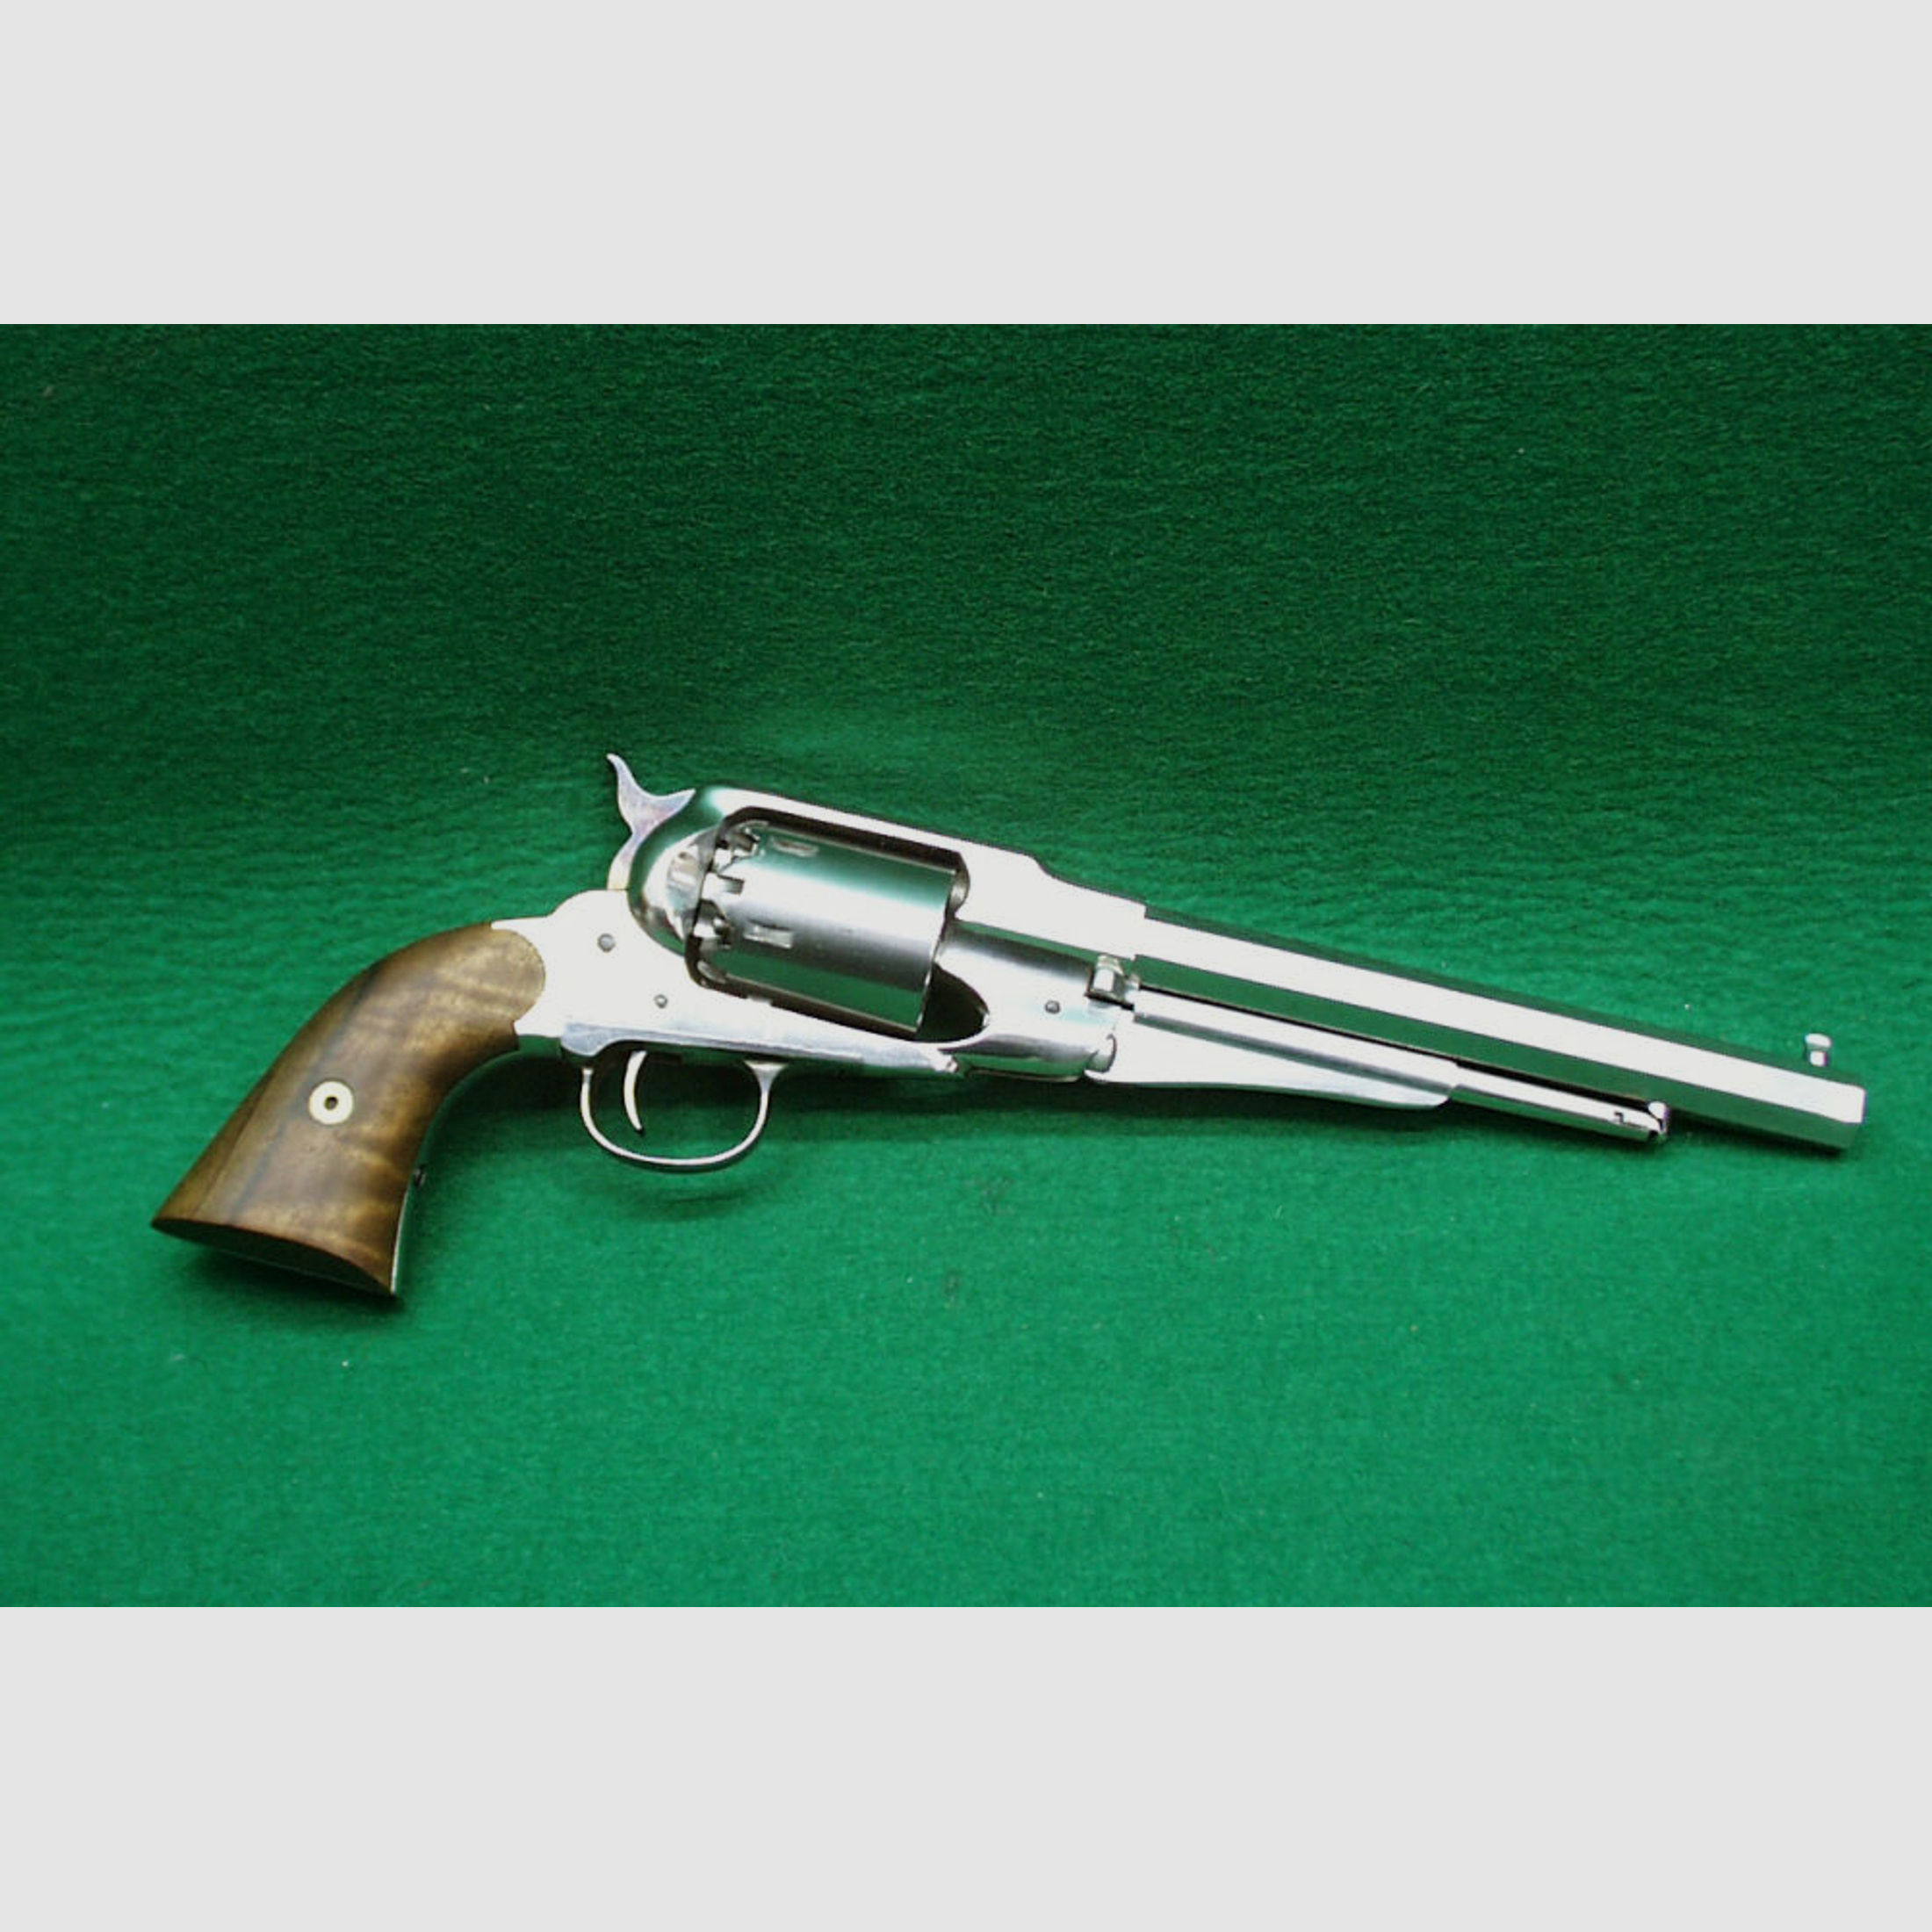 F.LLIPIETTA	 Mod. Remington Army 1858, stainless